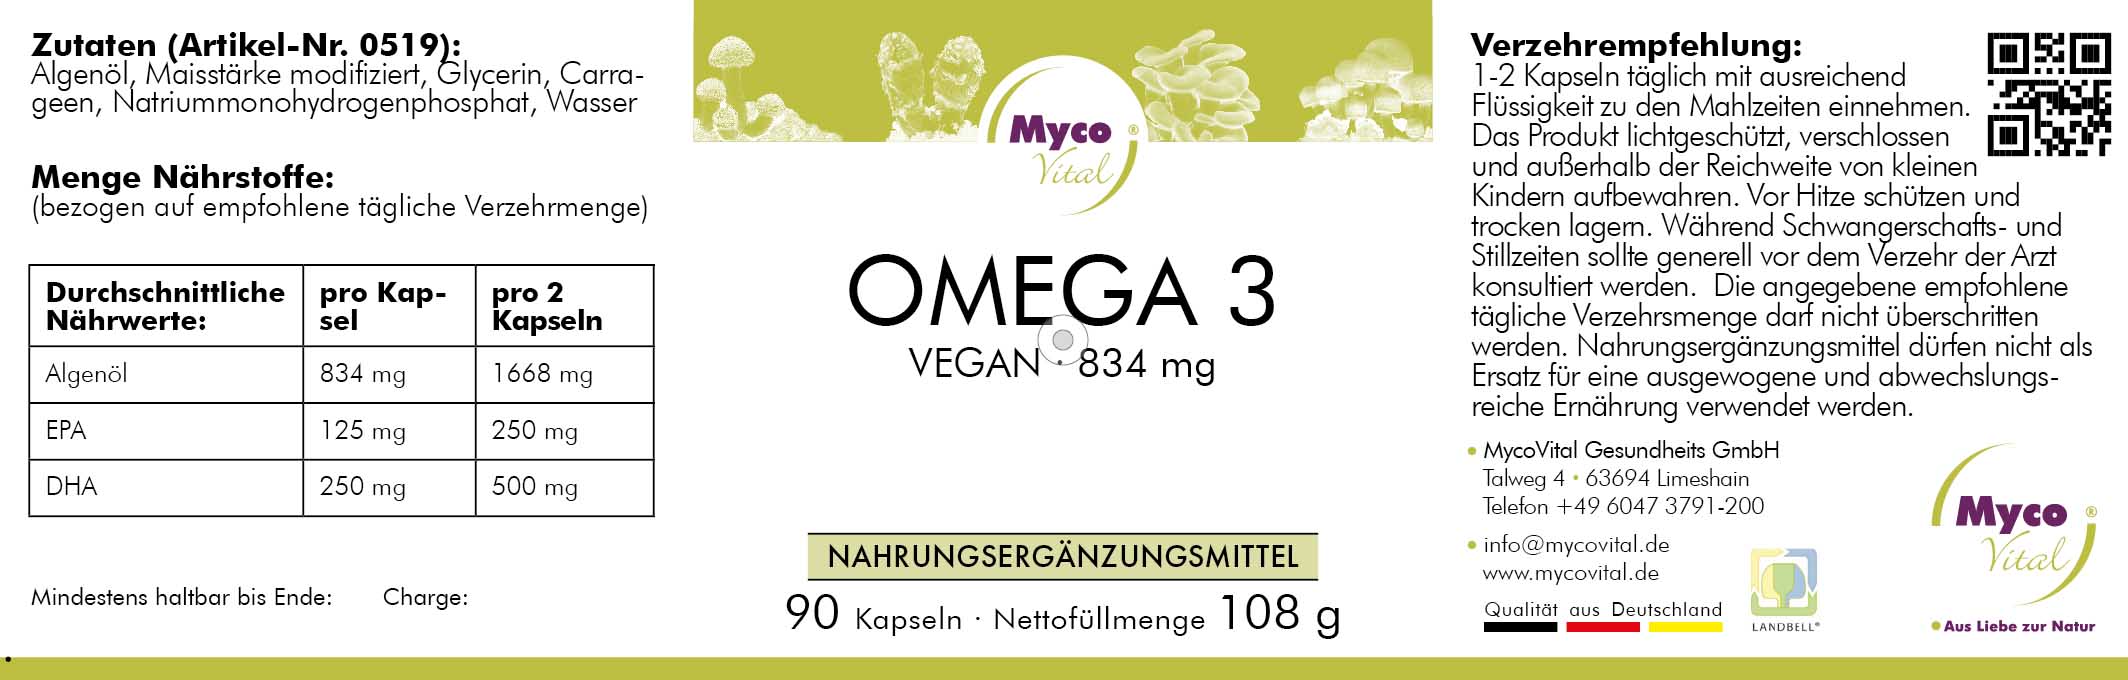 MycoVital Omega 3 VEG Algas 834 mg